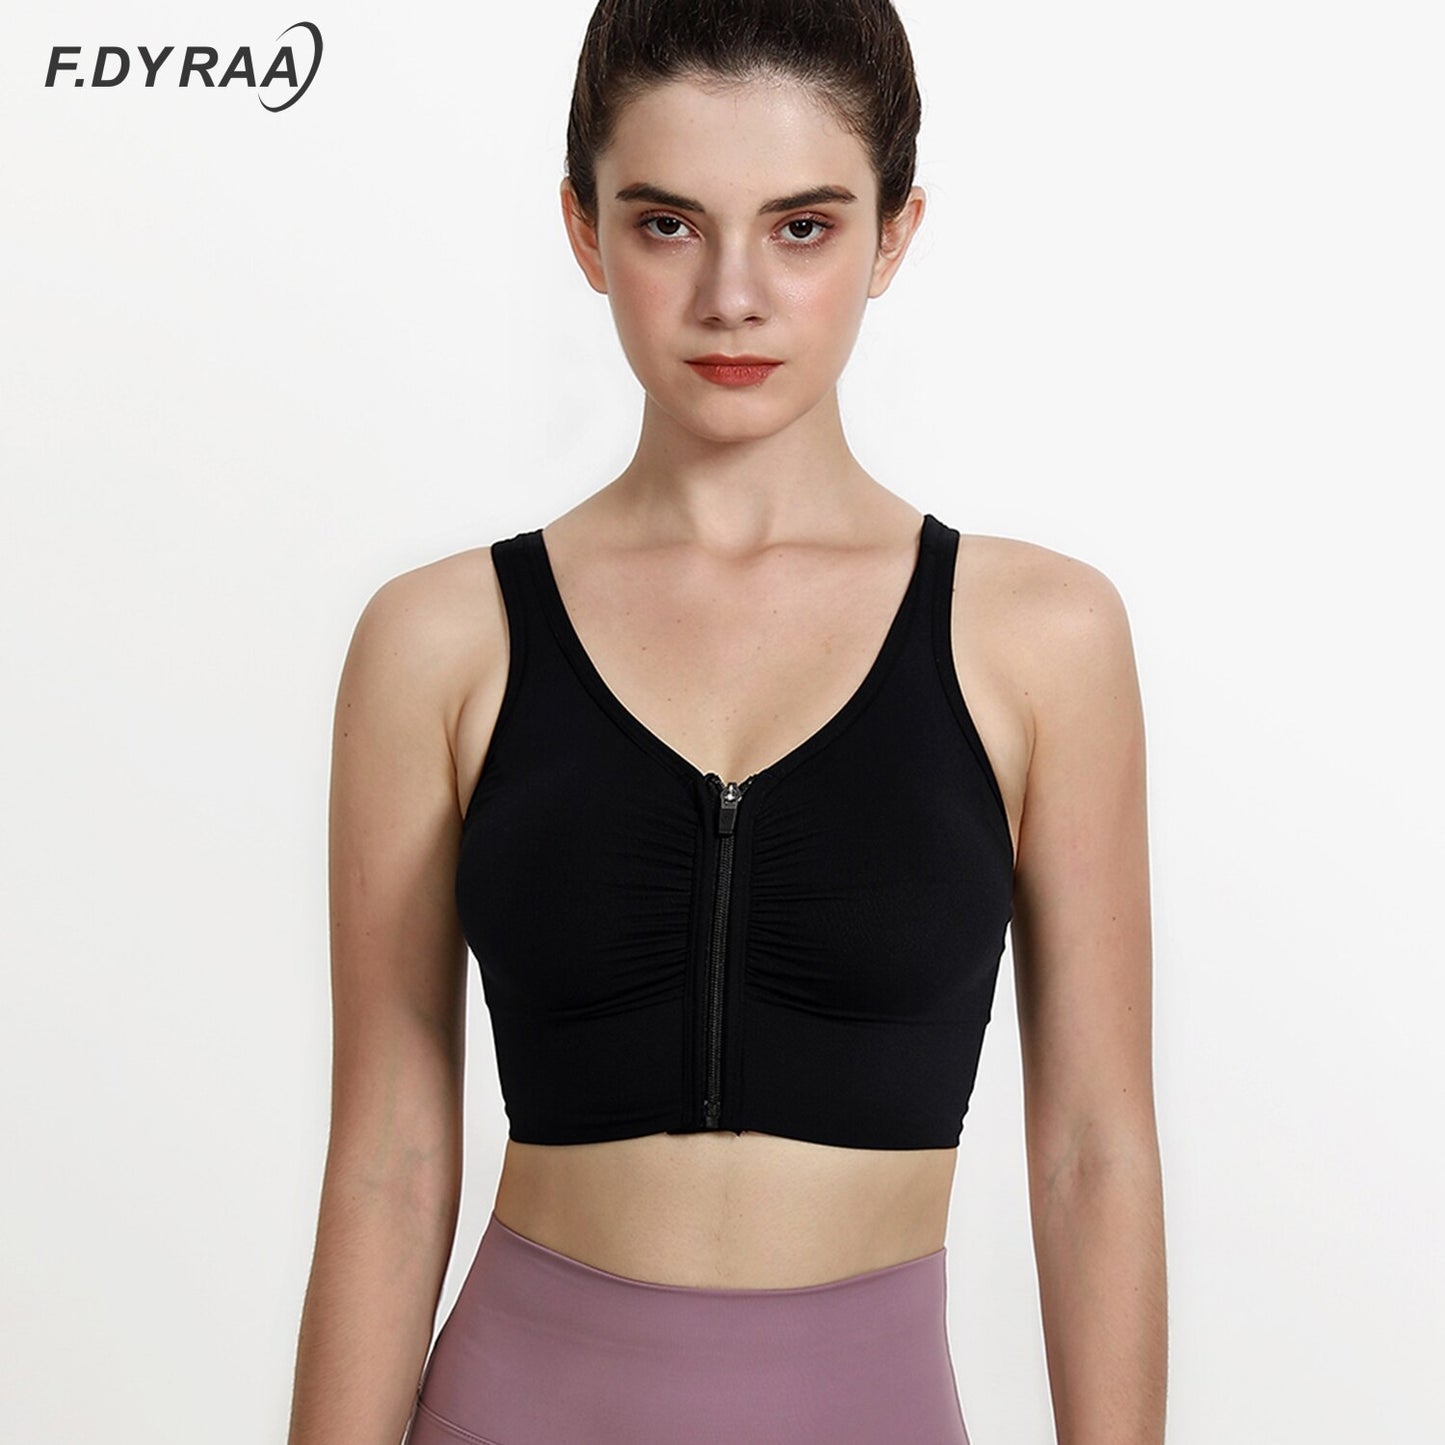 F.DYRAA Front Zipper Sports Bra Women Underwear Push Up Yoga Crop Top Bras Solid Athletic Vest Gym Fitness Shirt Sportswear